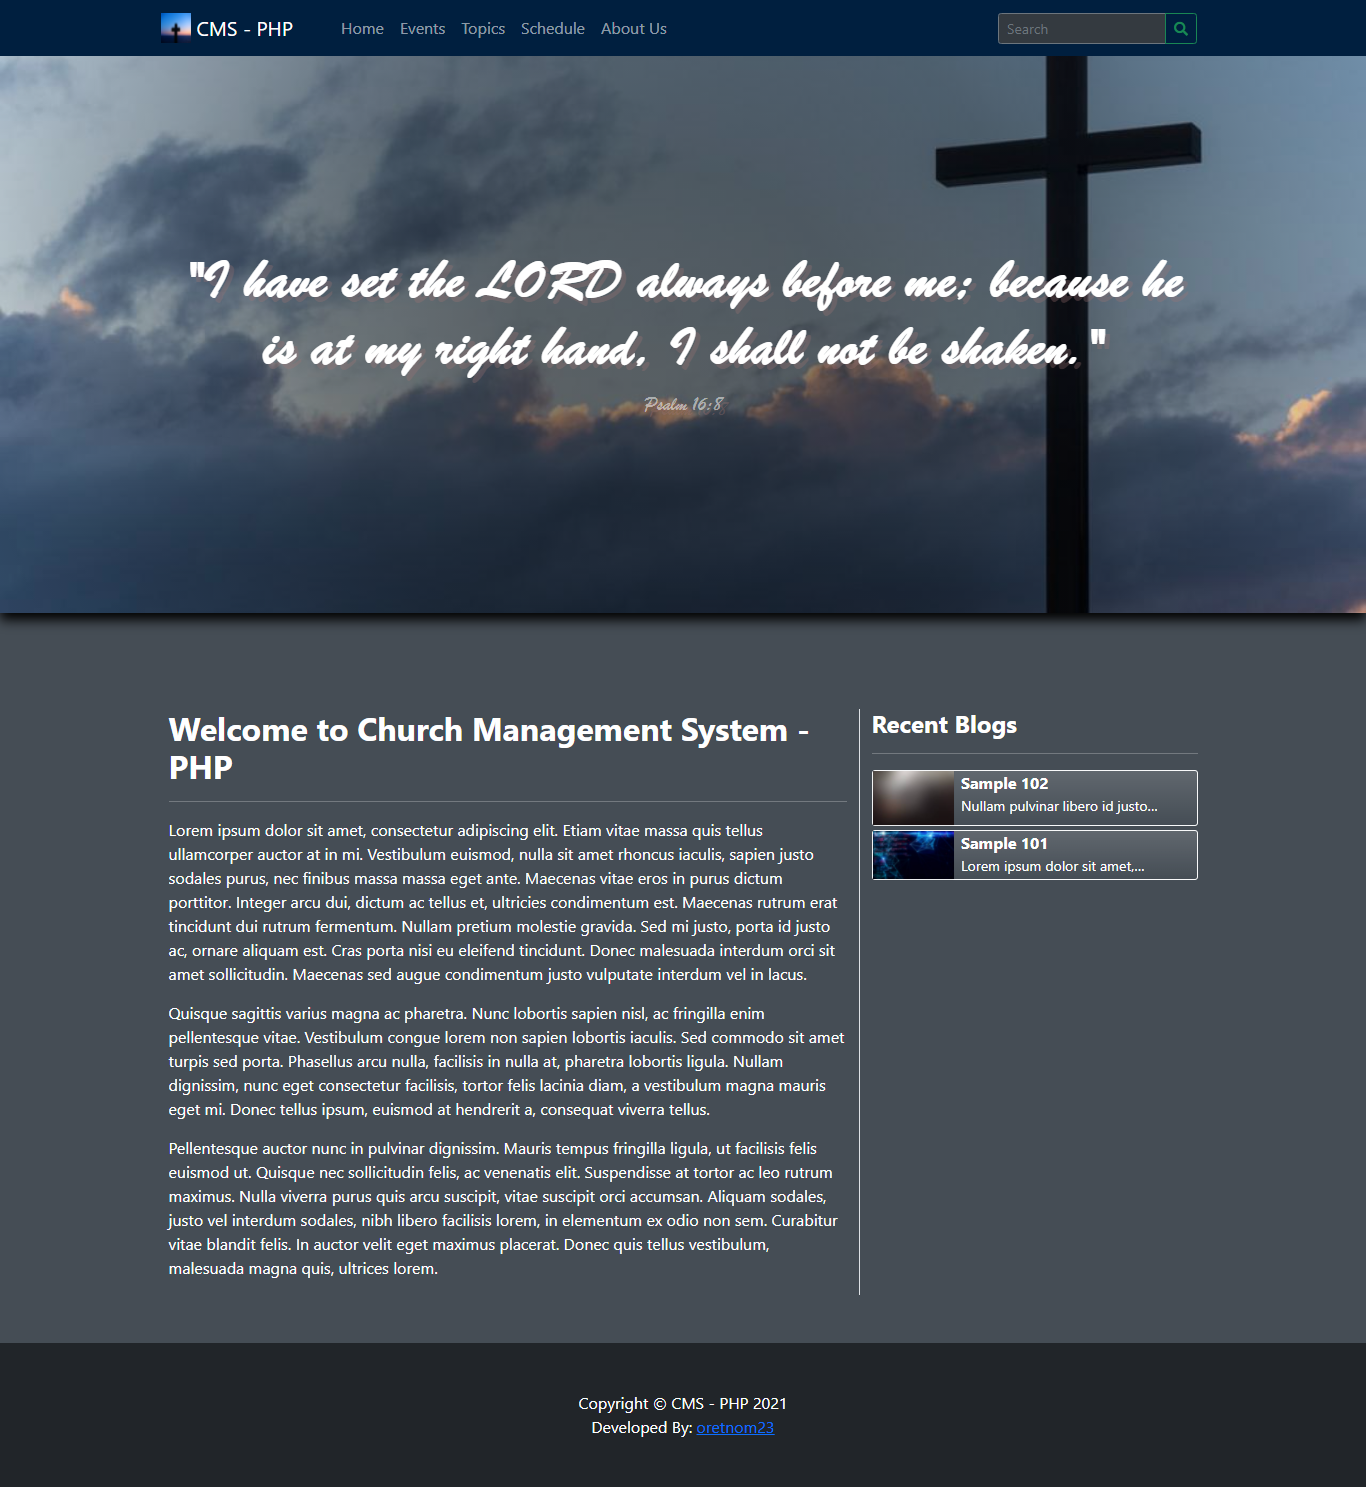 CHURCH MANAGEMENT SYSTEM - CMS